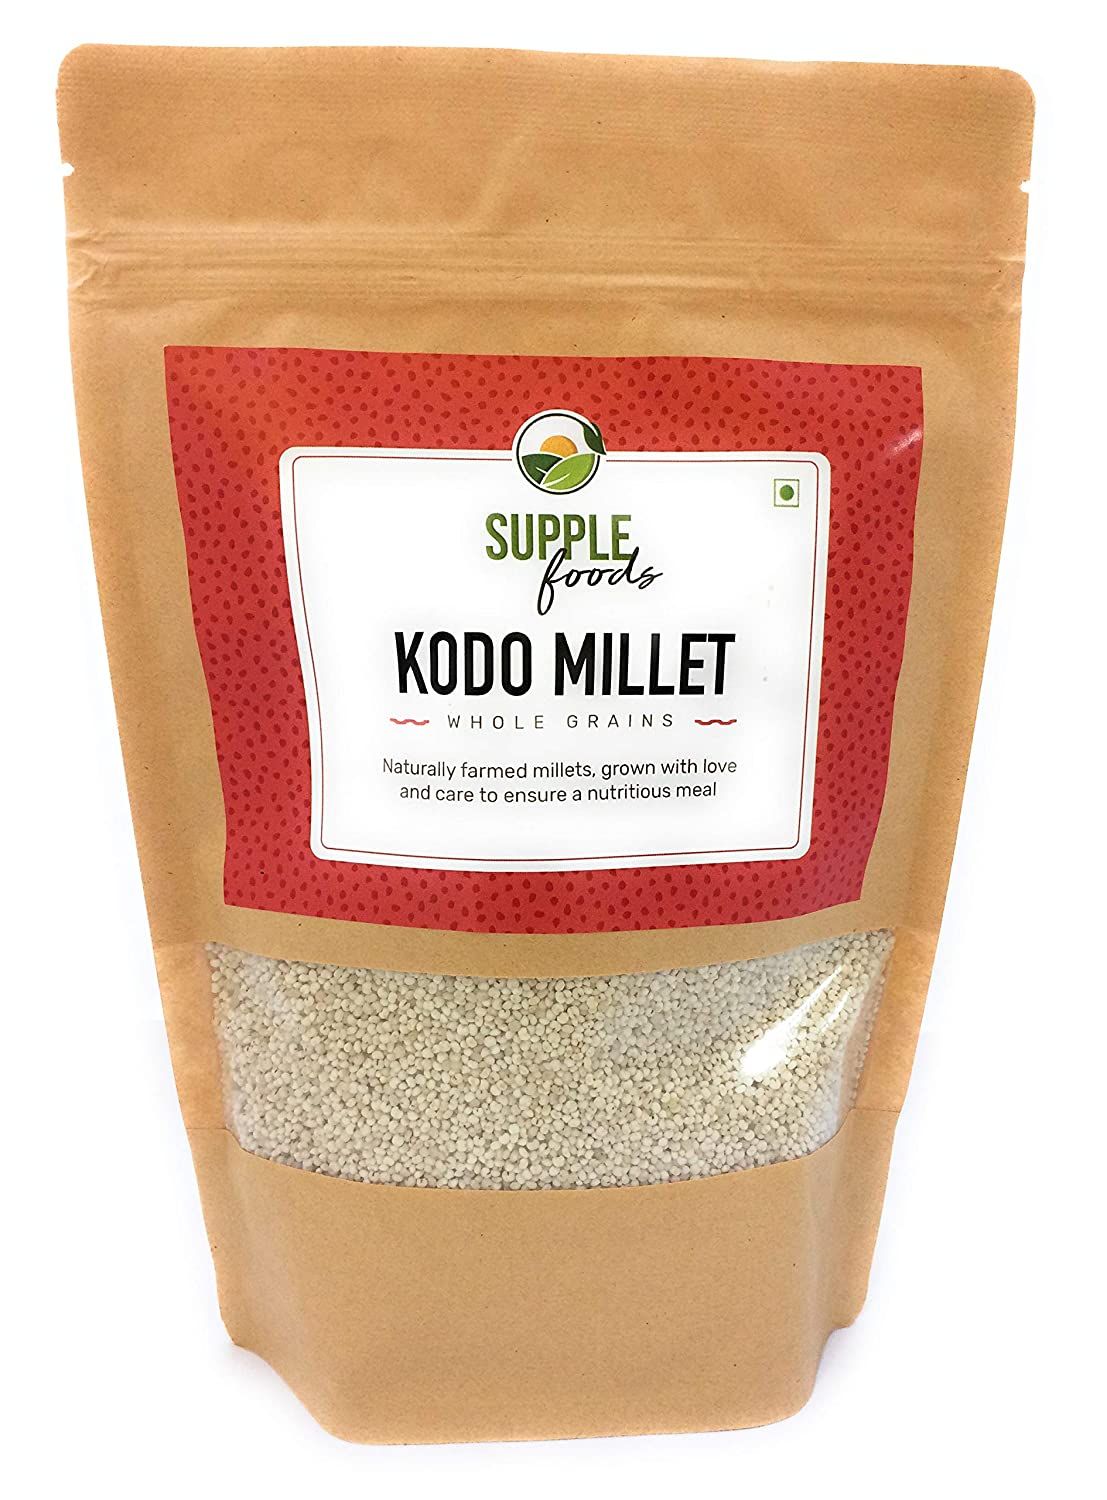 SUPPLE foods Kodo Millet Image